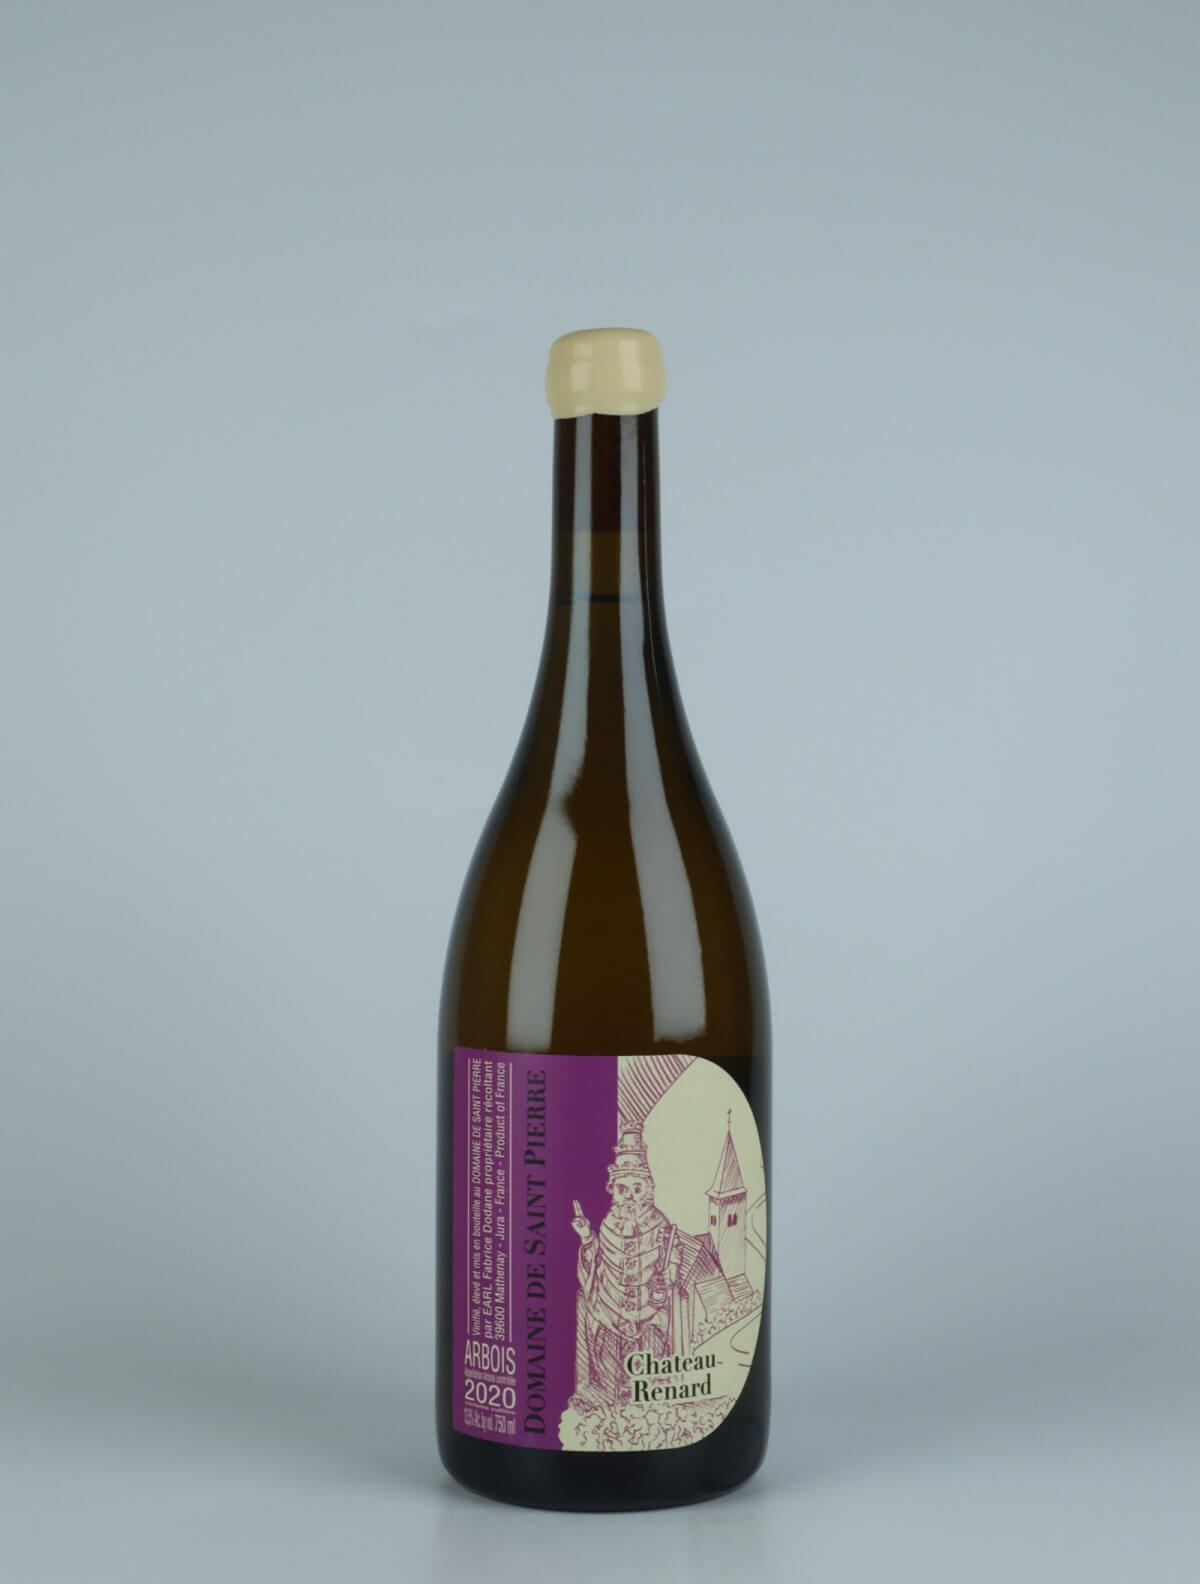 En flaske 2020 Arbois Blanc - Château Renard Hvidvin fra Domaine de Saint Pierre, Jura i Frankrig